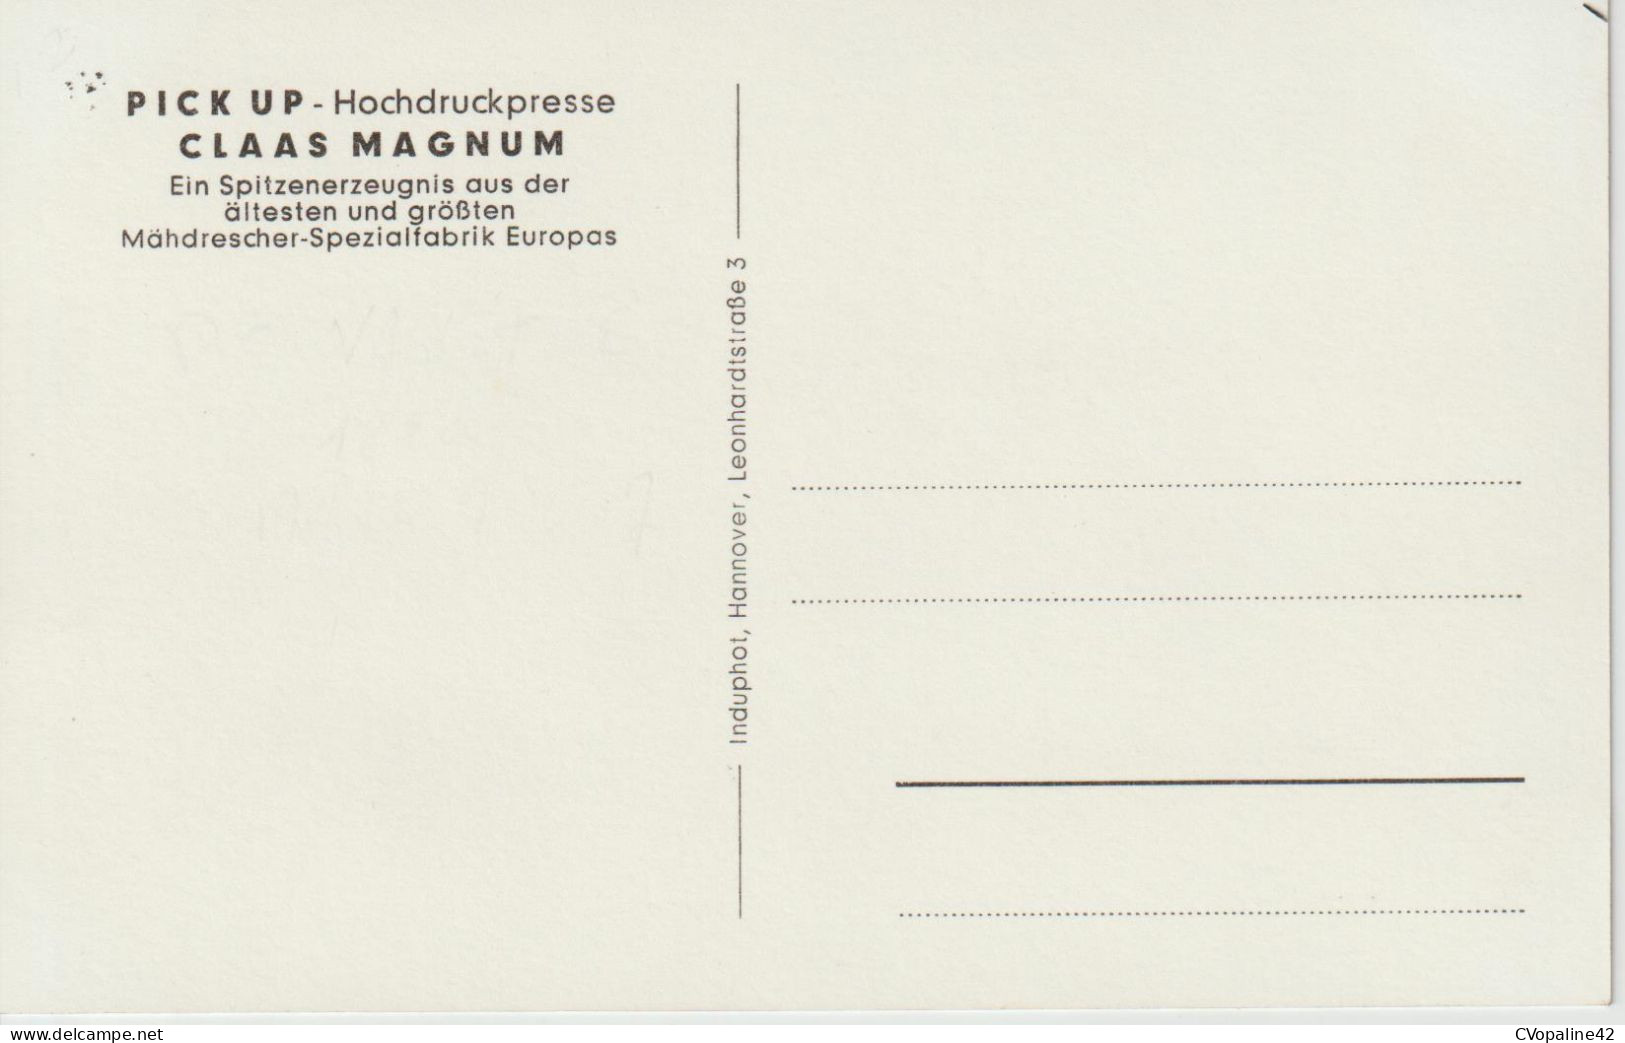 CLAAS MAGNUM - PICK UP - Hochdruckpresse - Advertising